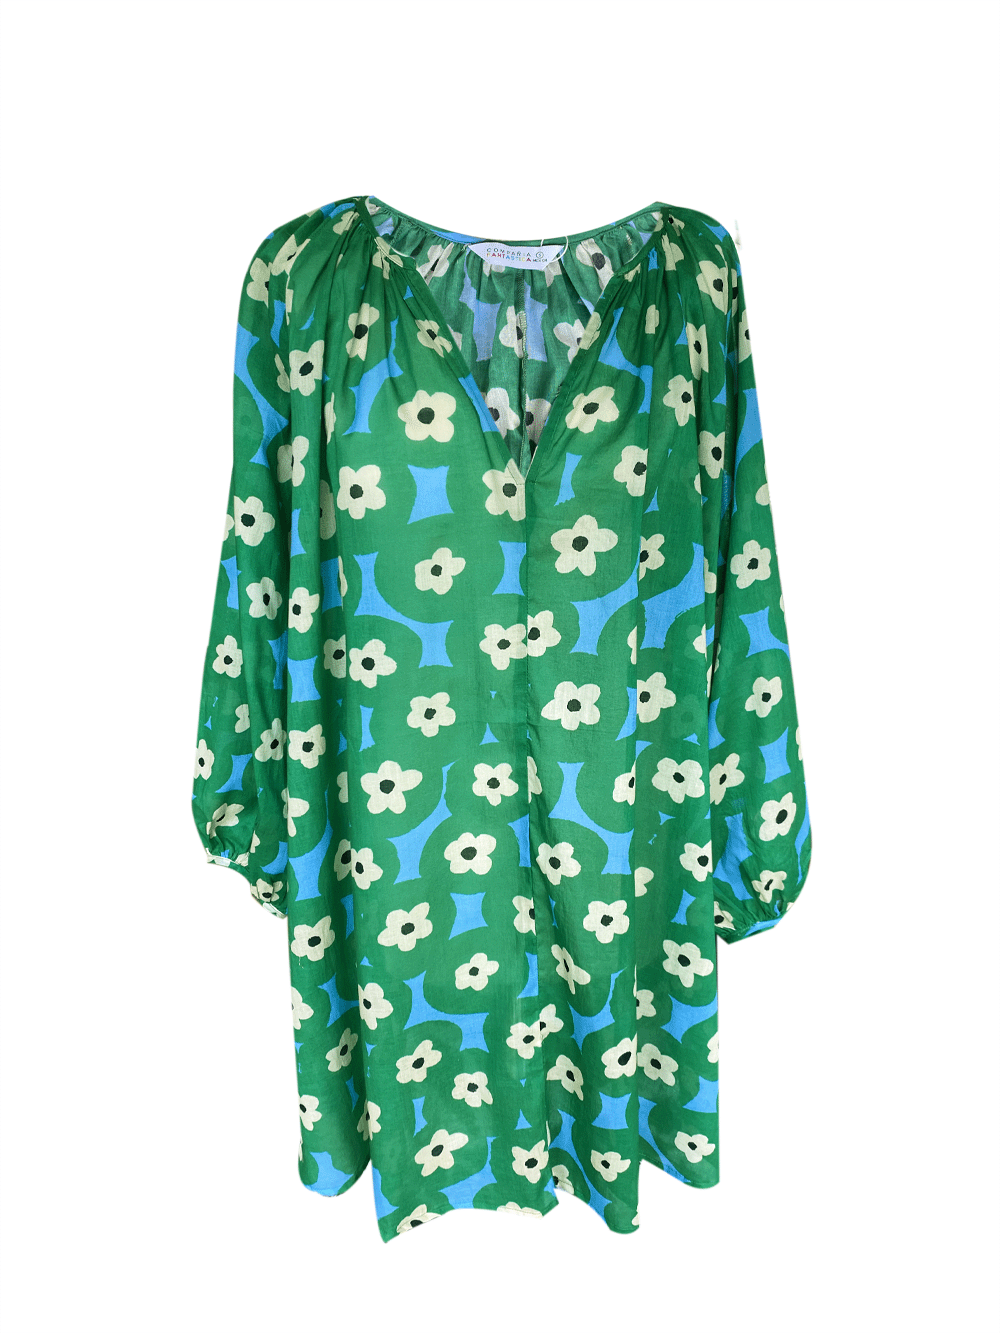 COMPANIA FANTASTICA Green Flower Summer Dress Tunic S